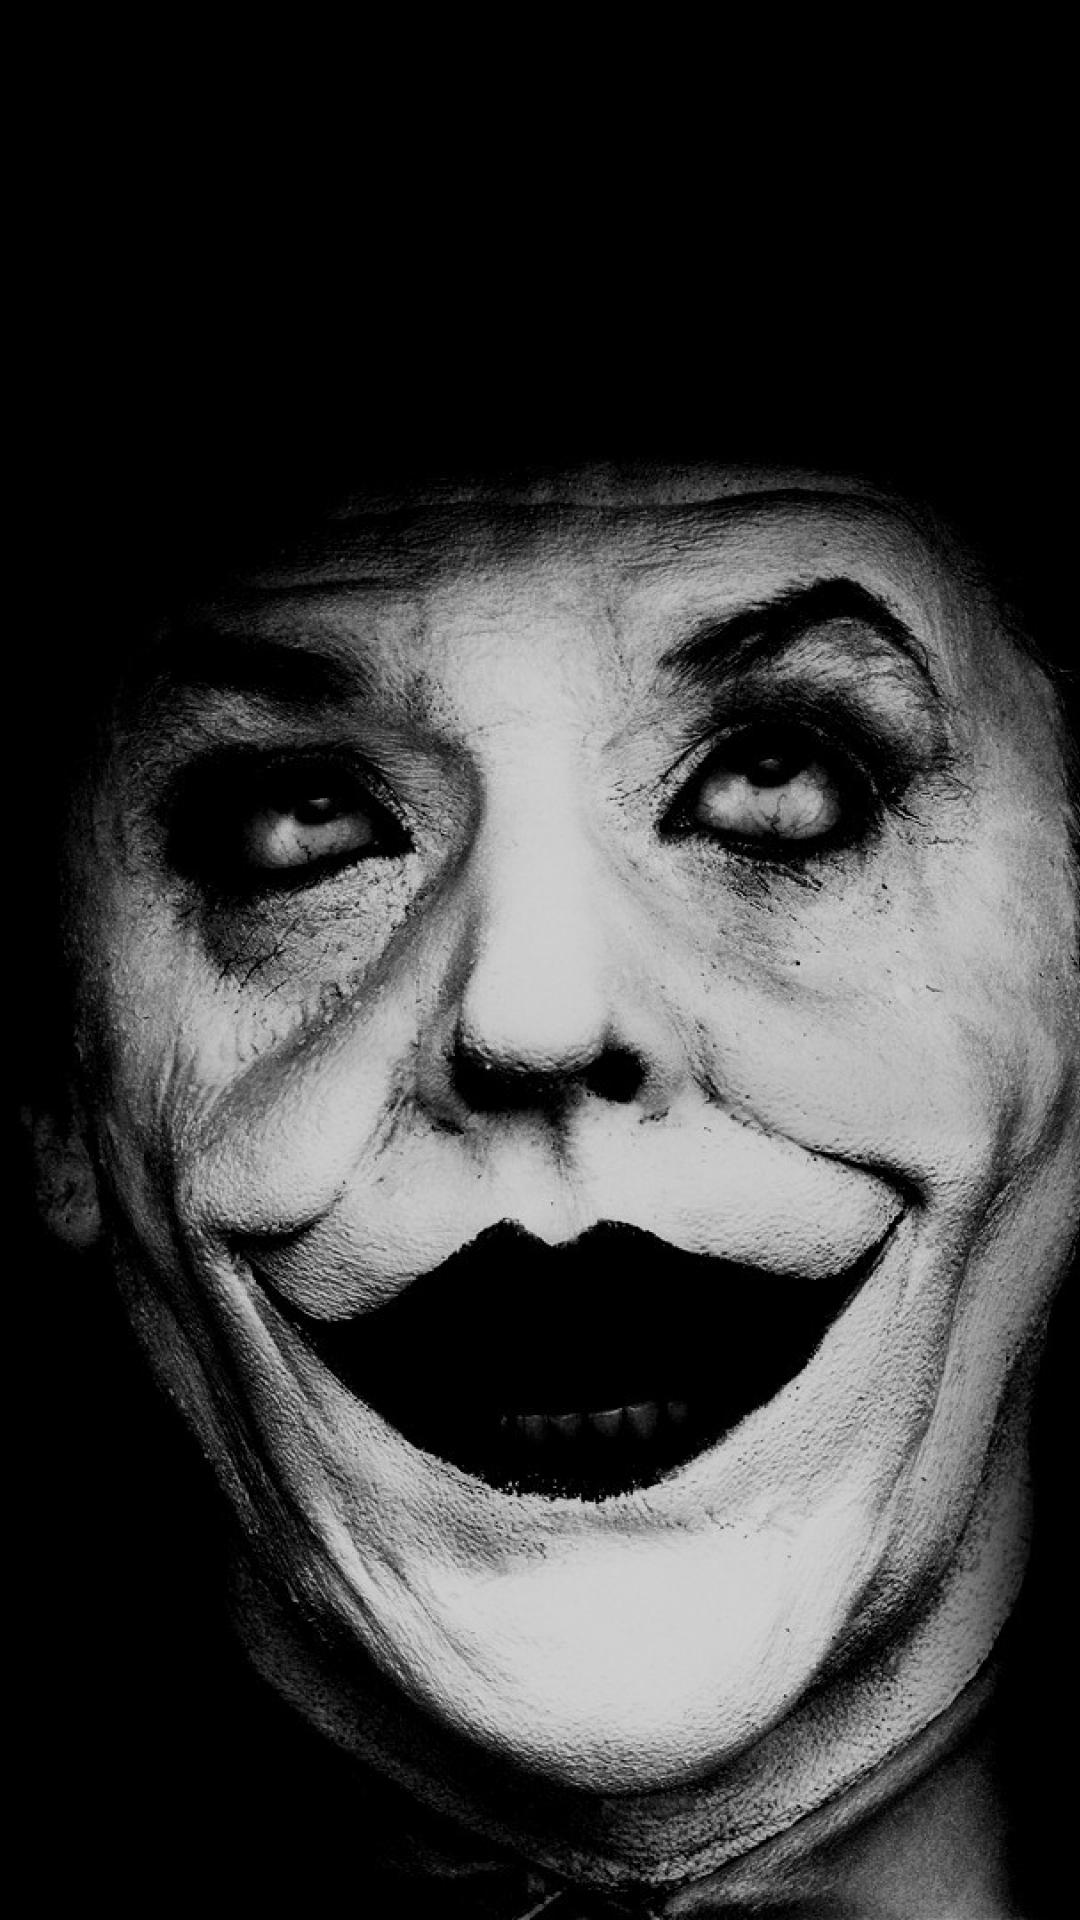 Jack Nicholson Joker Wallpapers - Wallpaper Cave